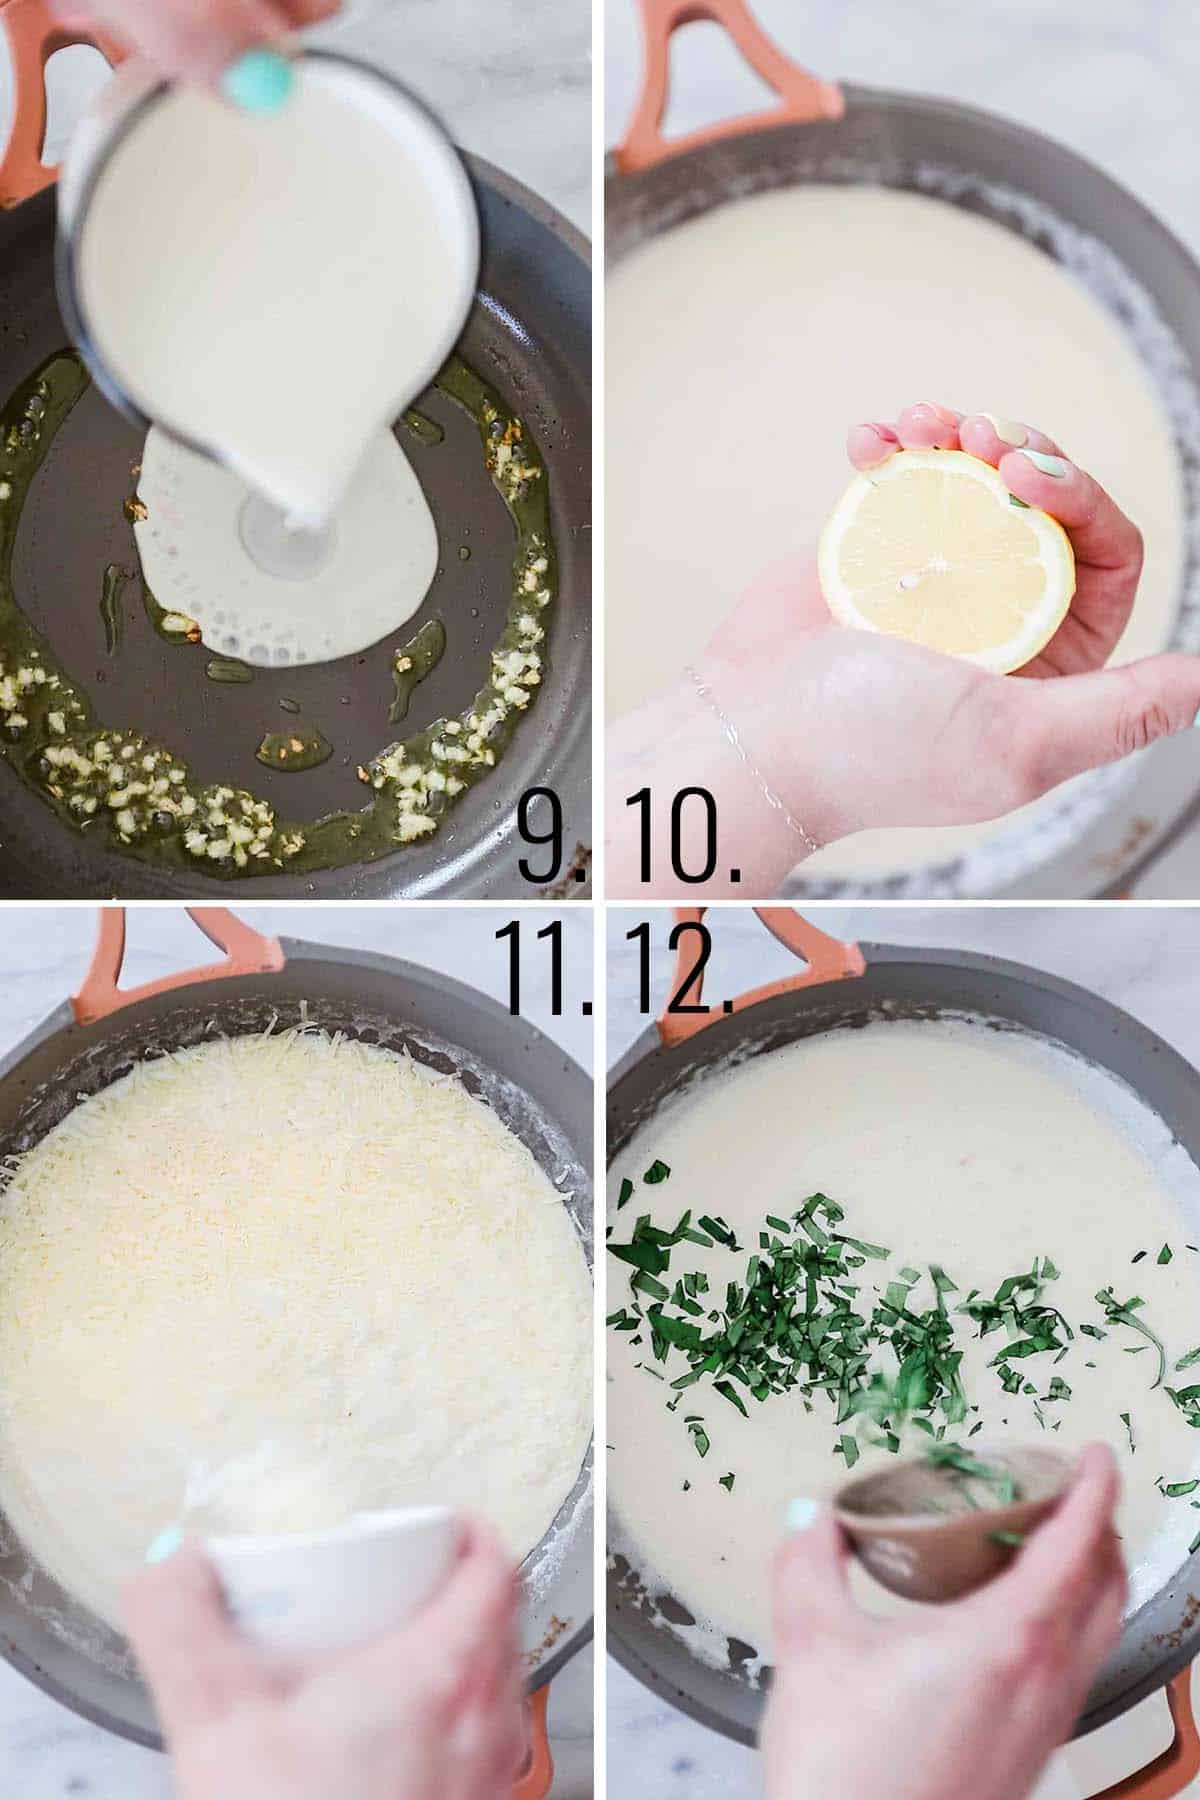 How to make a parmesan cream sauce.